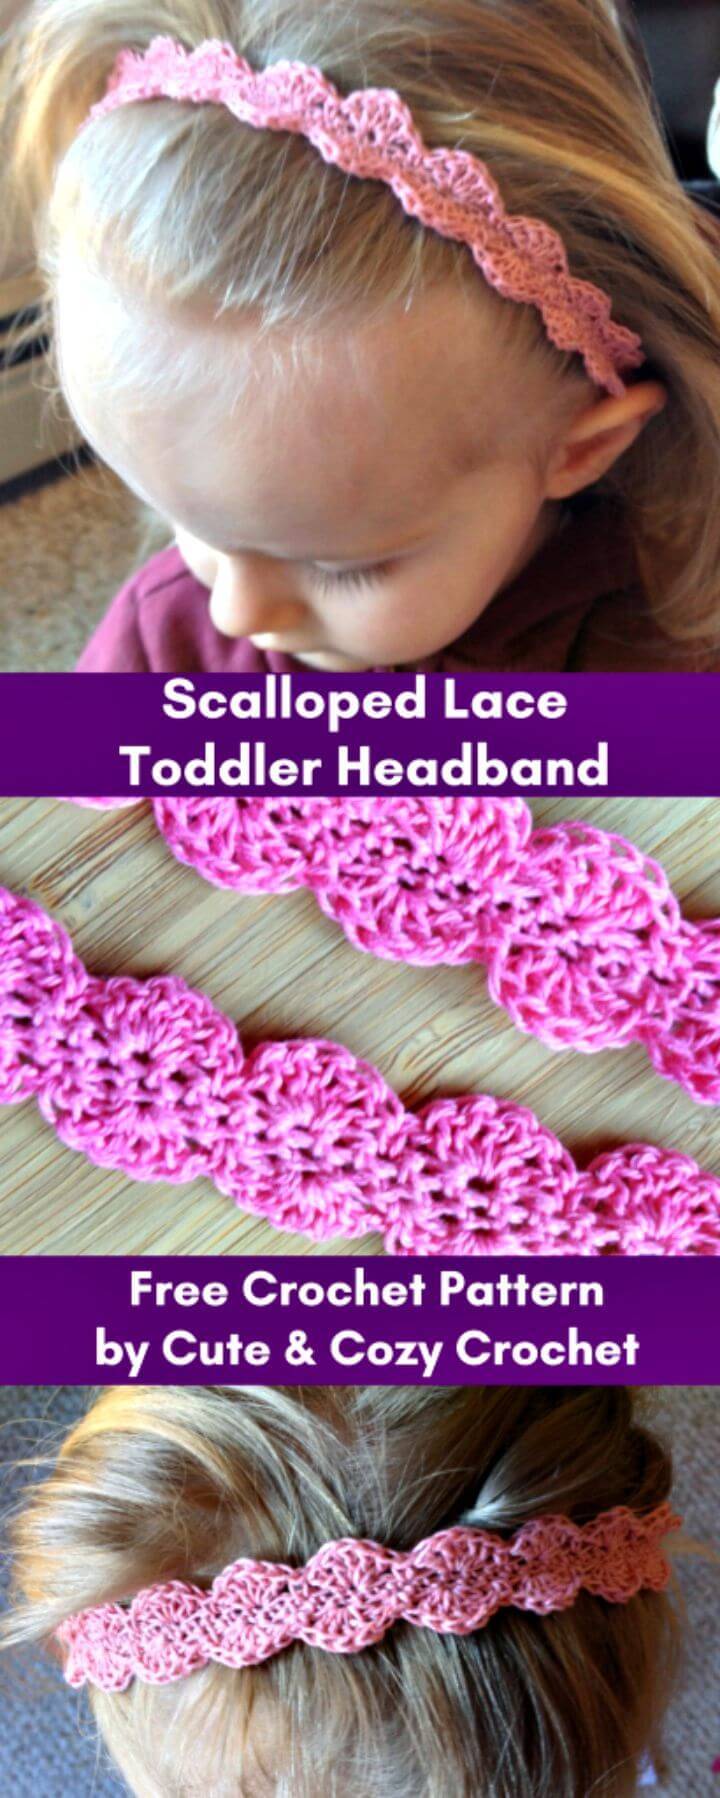 Easy Free Crochet Scalloped Lace Toddler Headband Pattern